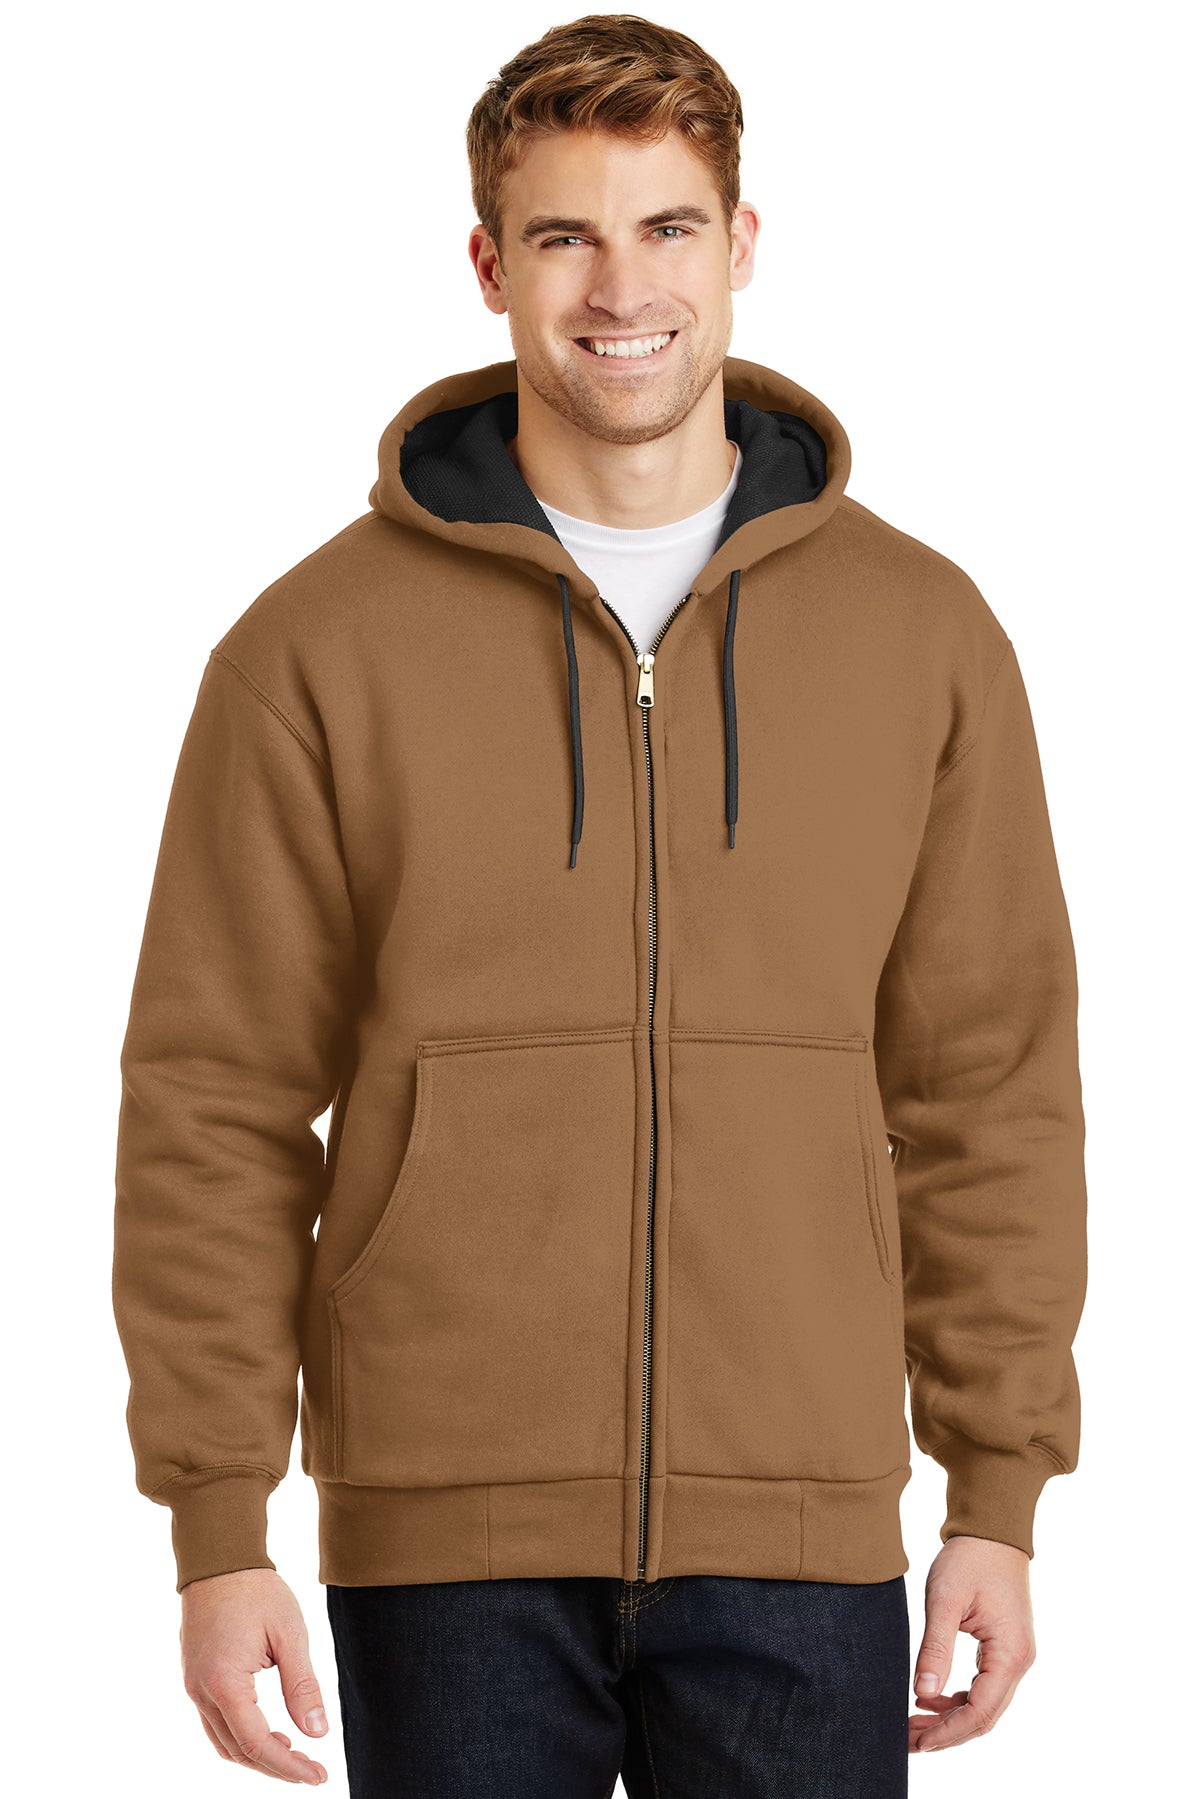 Buy duck-brown CornerStone Heavyweight Full-Zip Hooded Sweatshirt with Thermal Lining